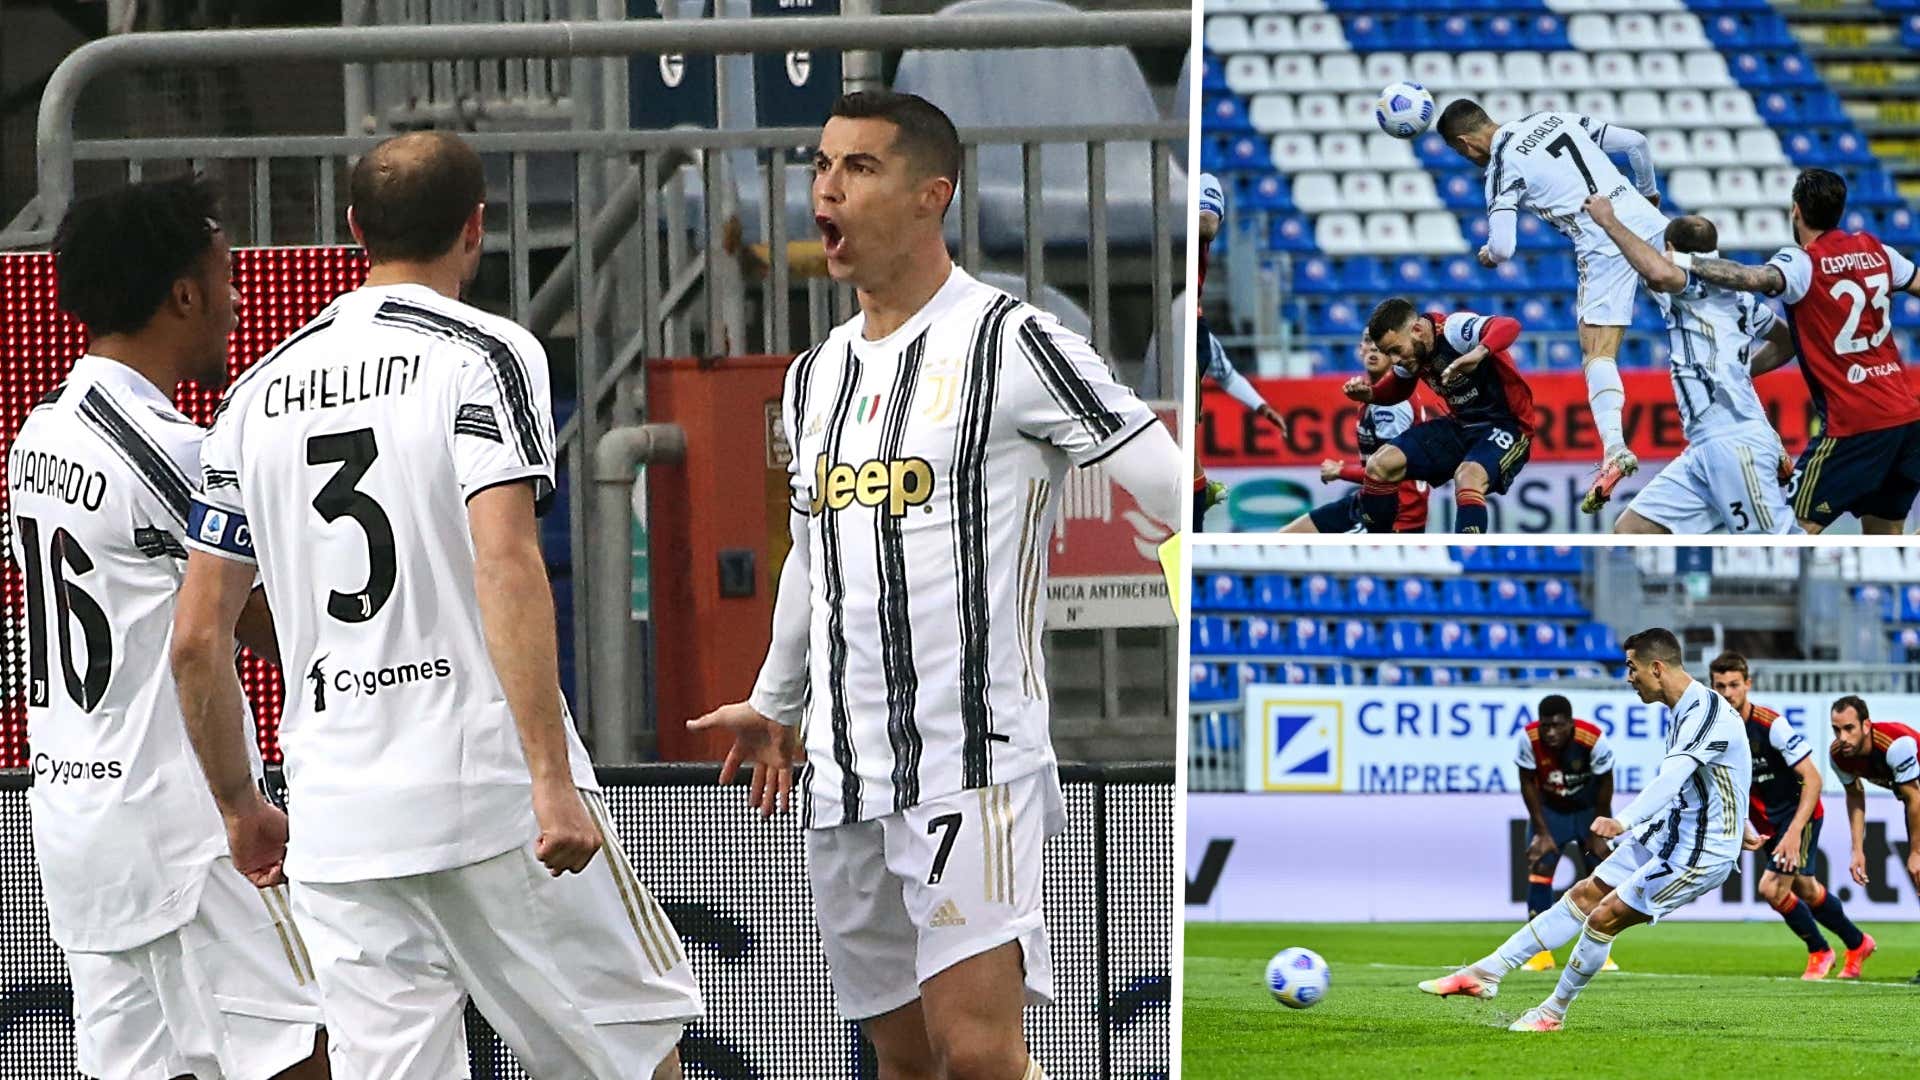 Cristiano Ronaldo hat-trick Juventus - Cagliari